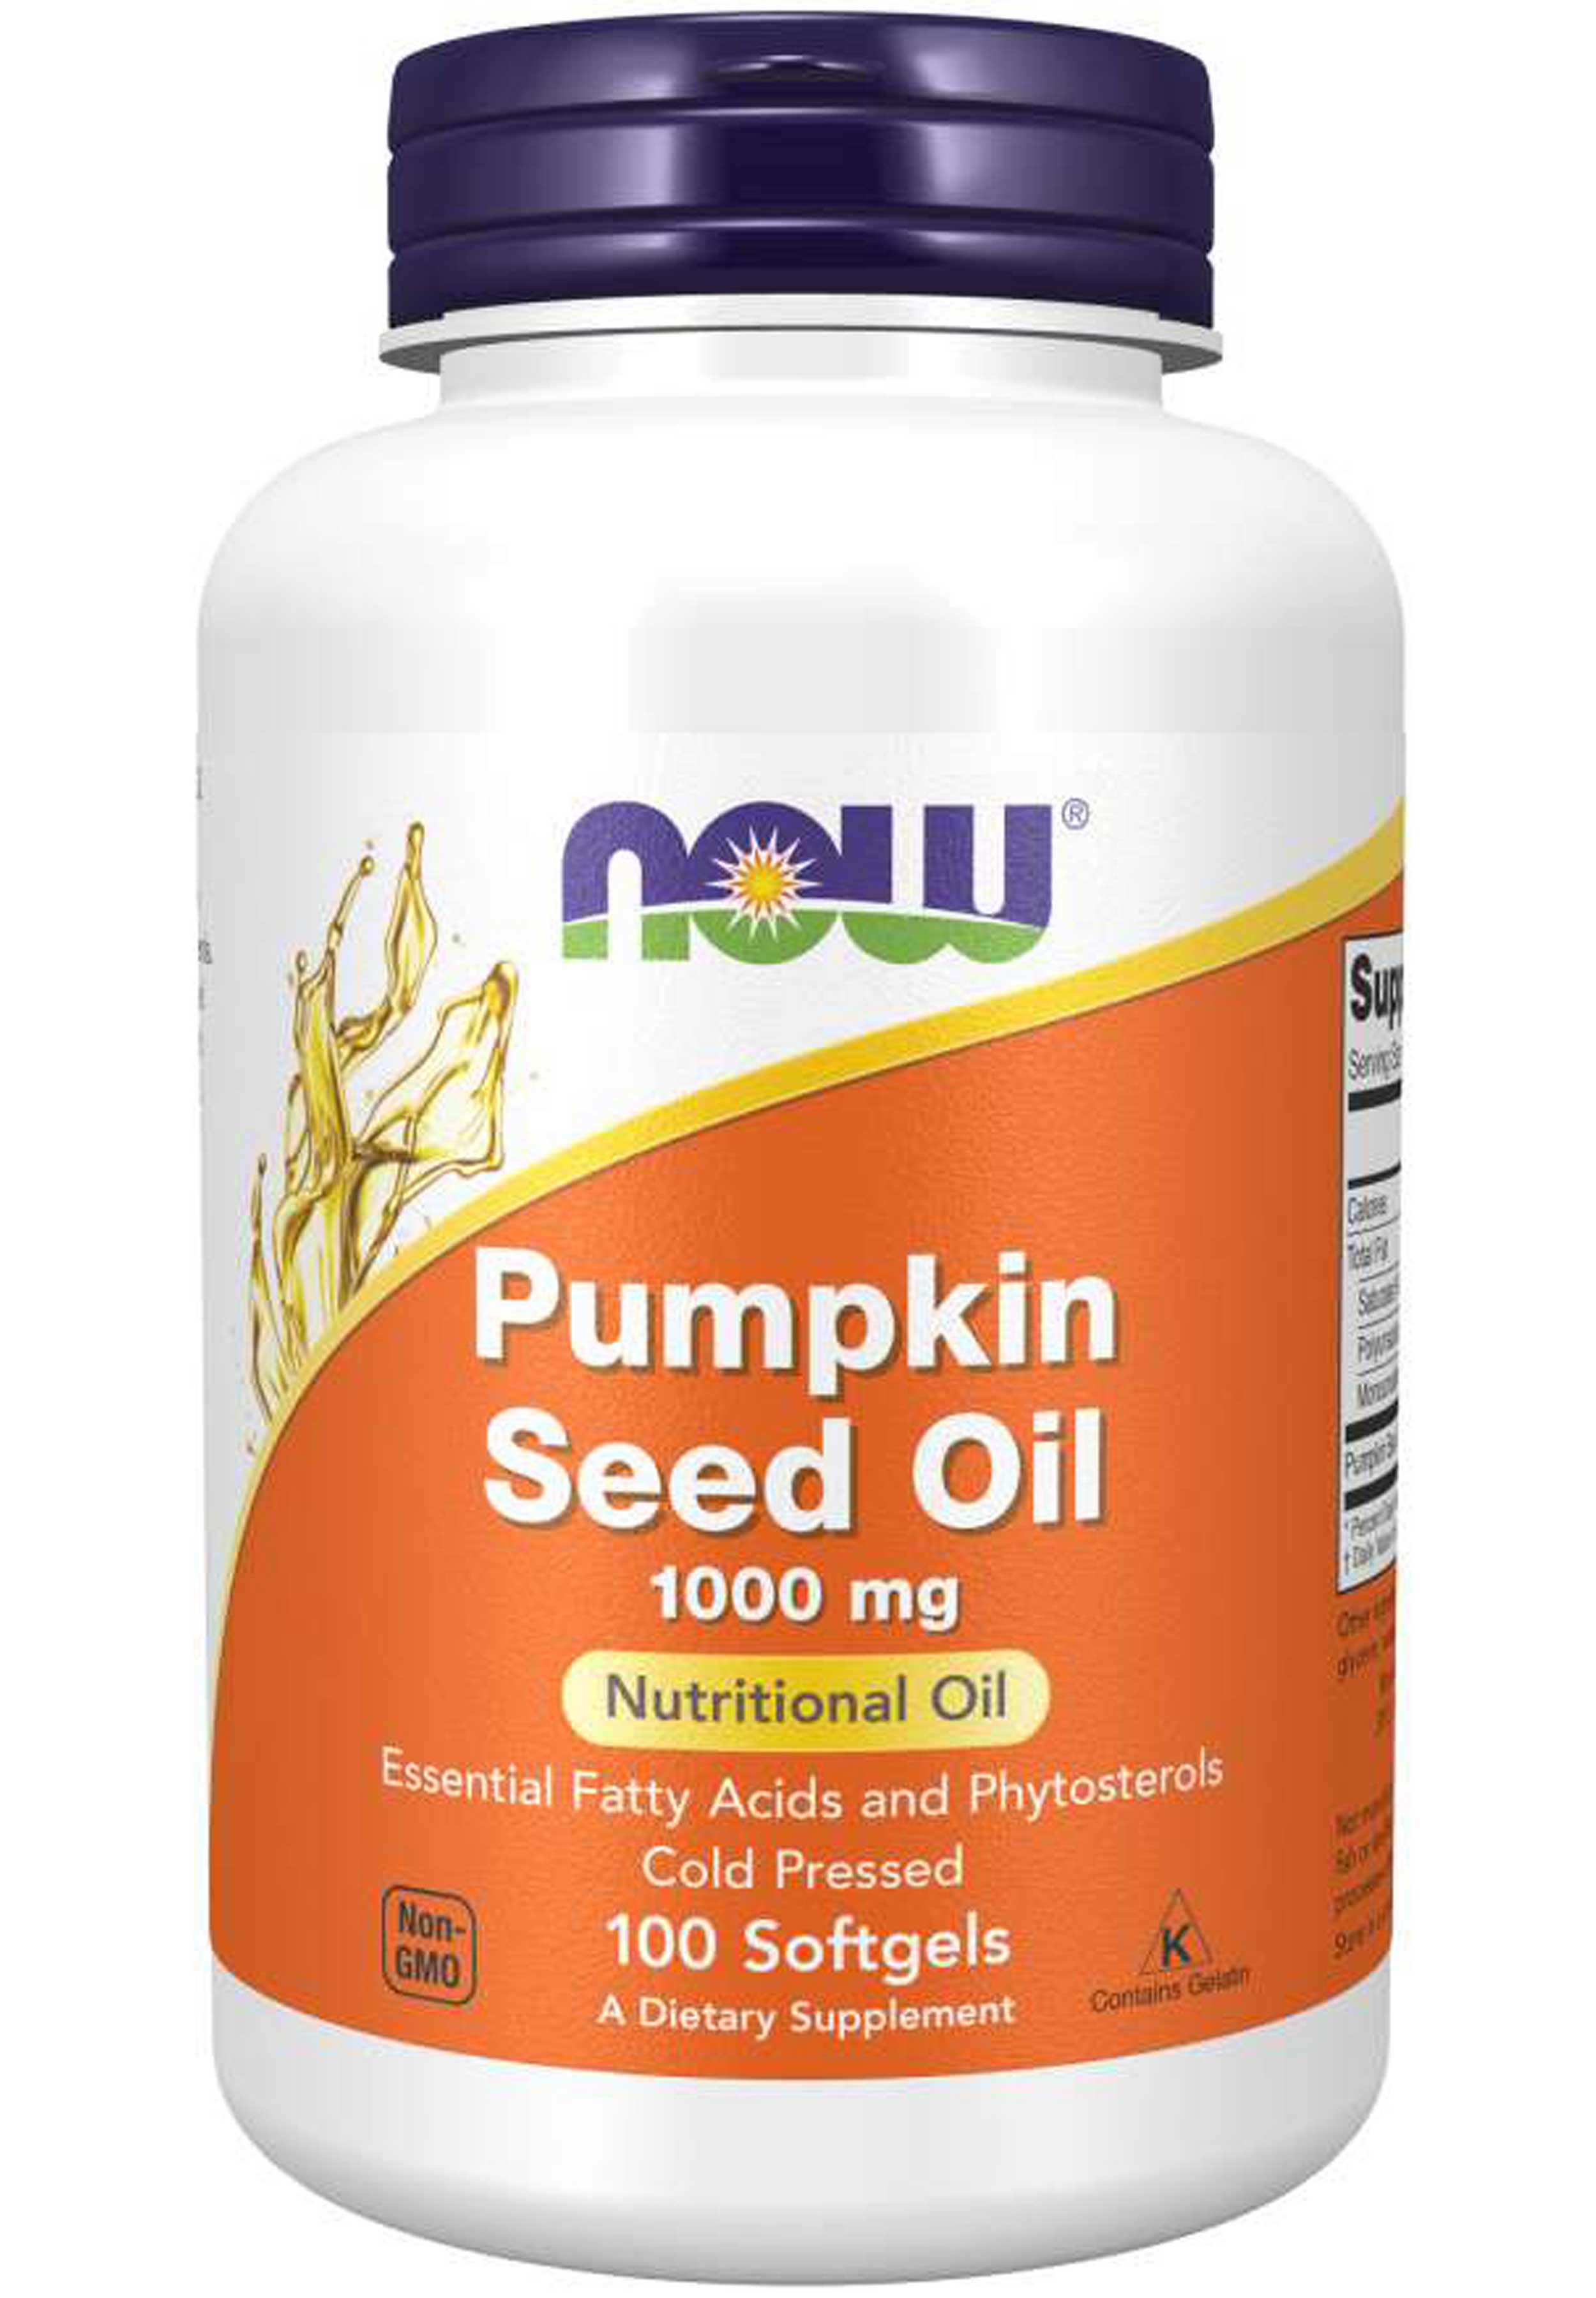 NOW Pumpkin Seed Oil 1000 mg